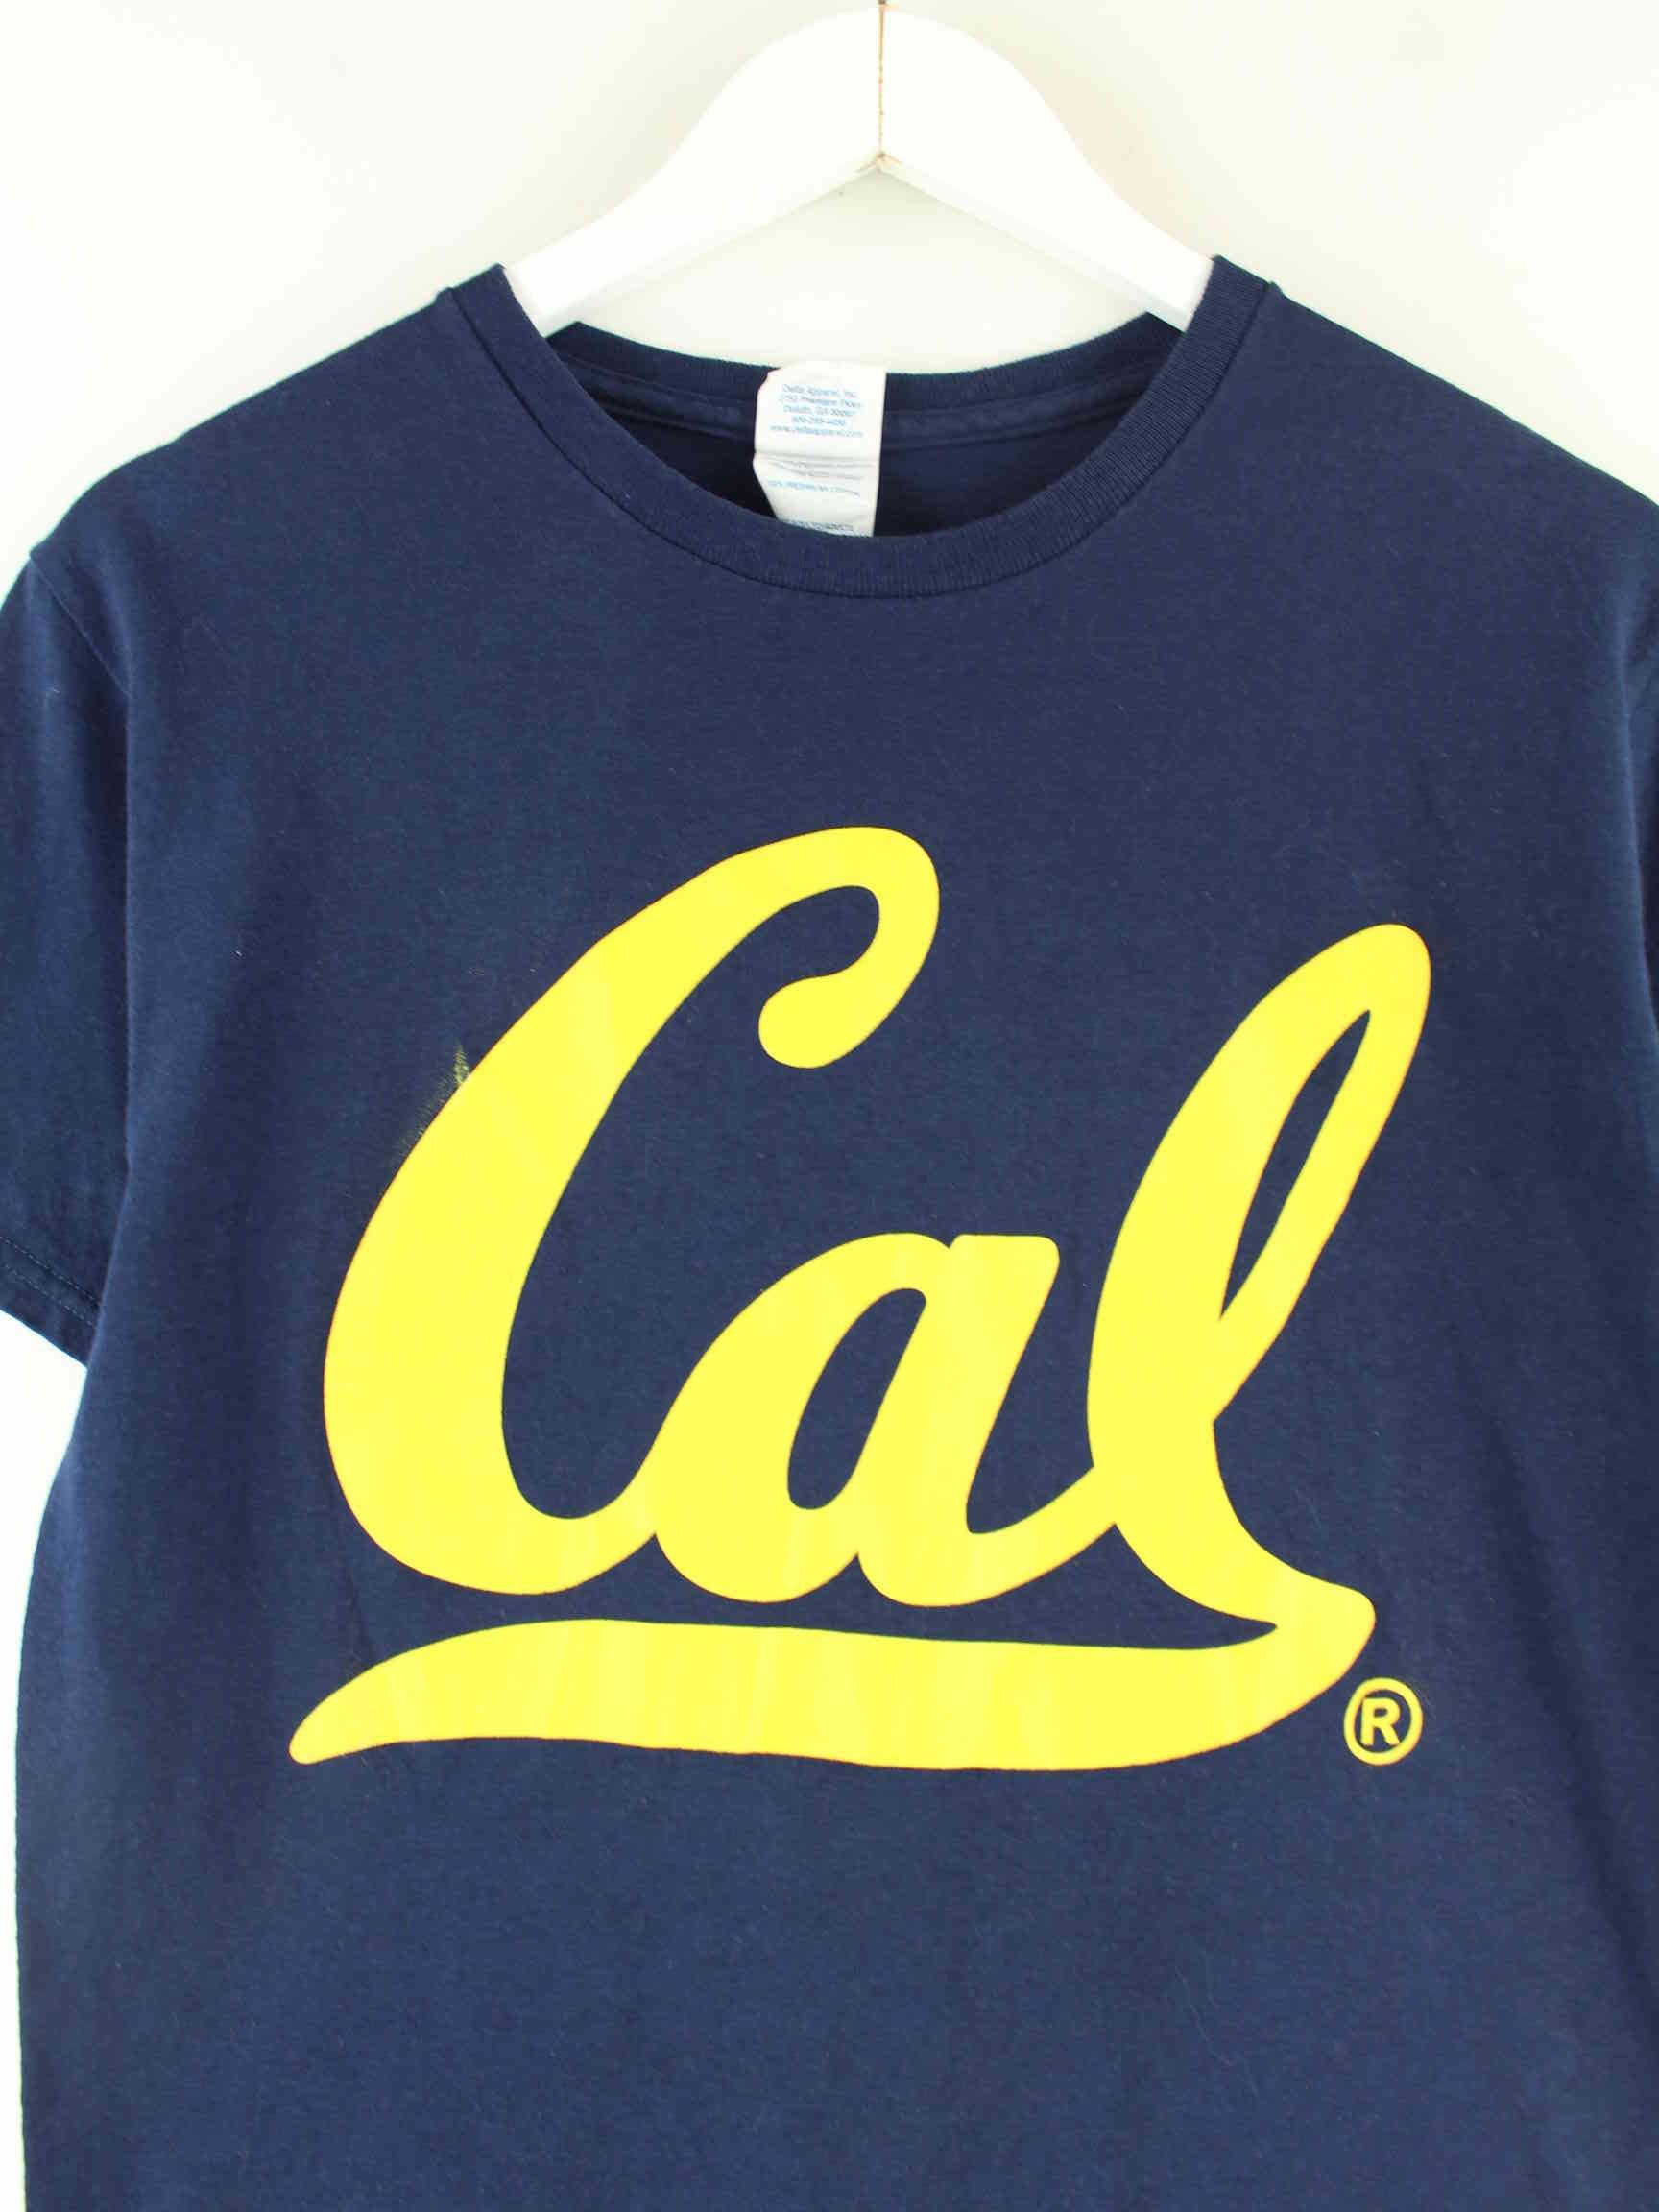 Delta 00s Berkeley California T-Shirt Blau S (detail image 1)